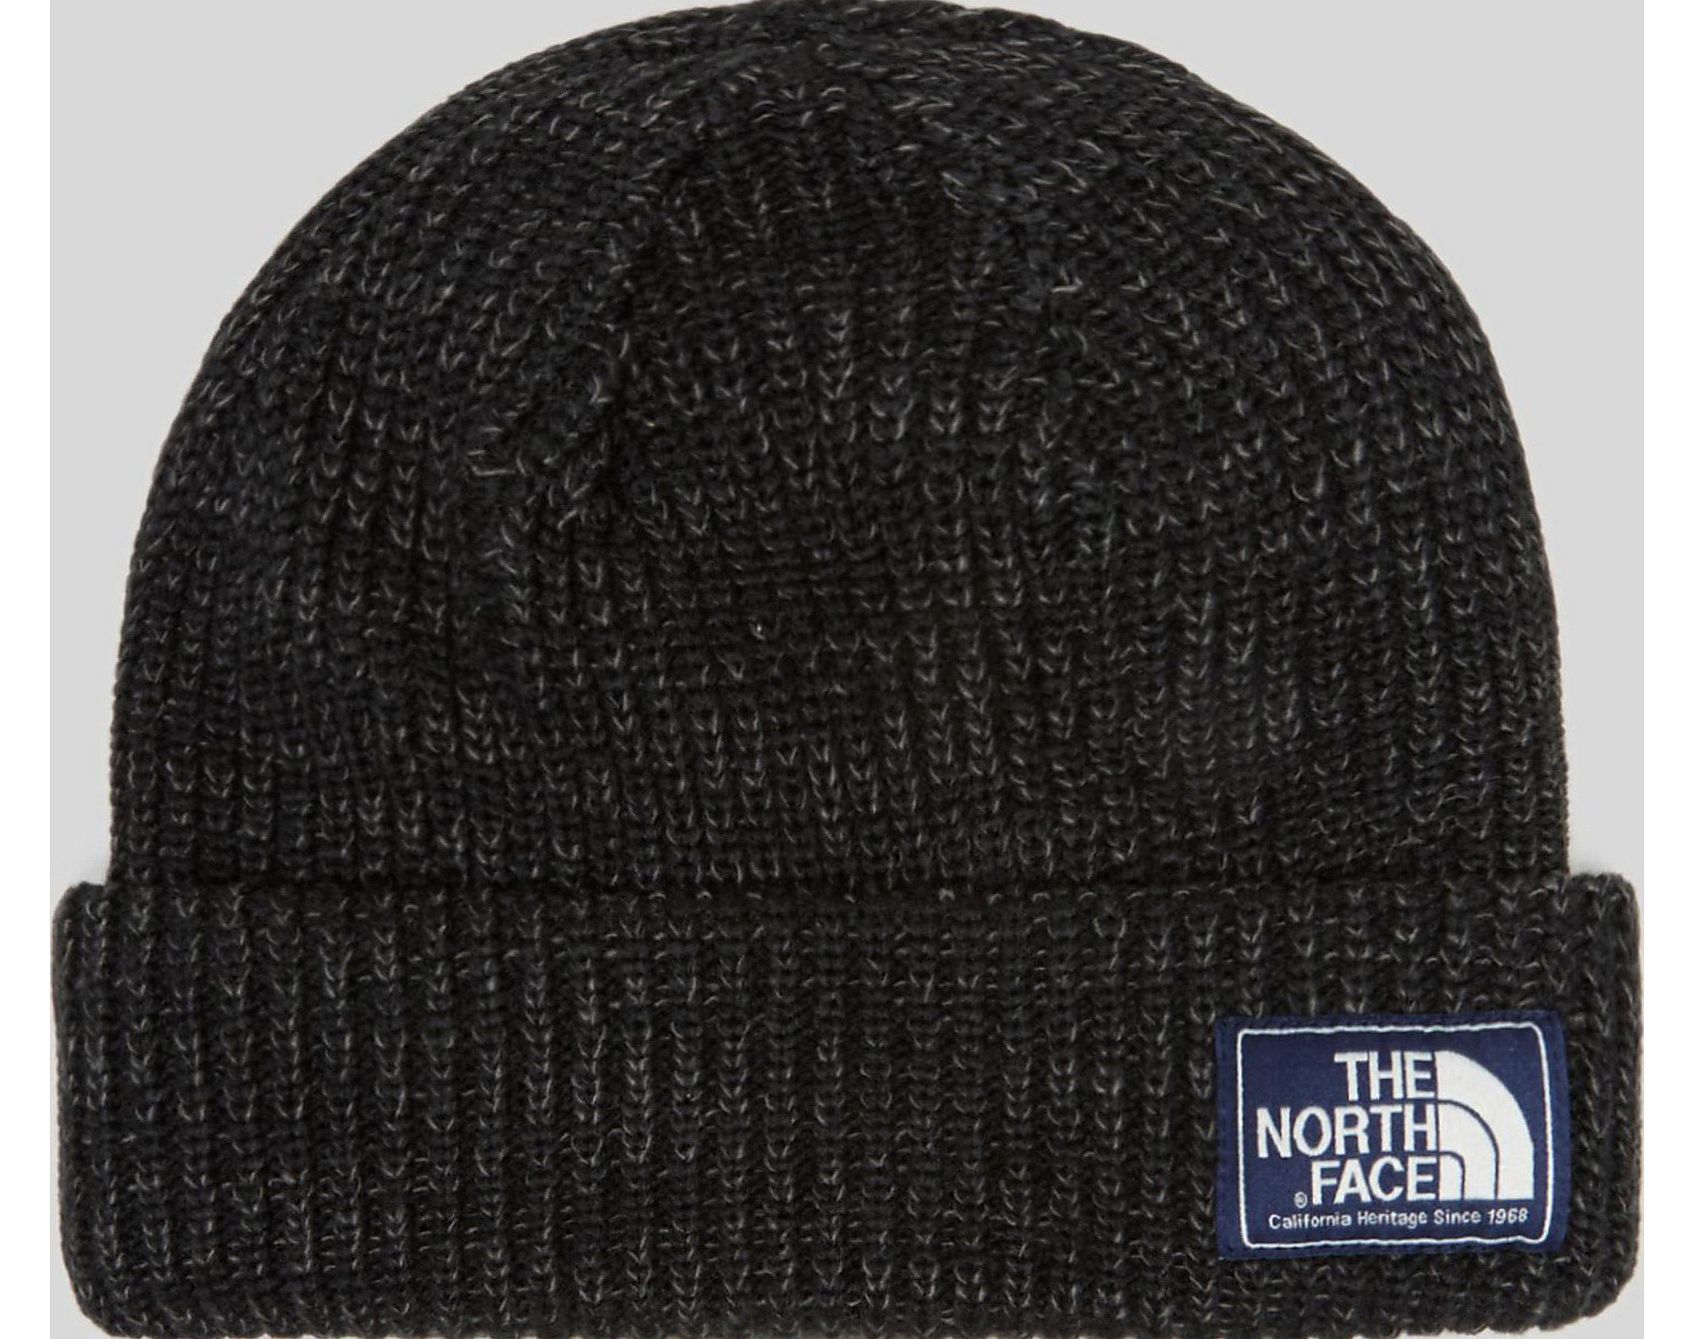 The North Face Salt Dog Beanie Hat